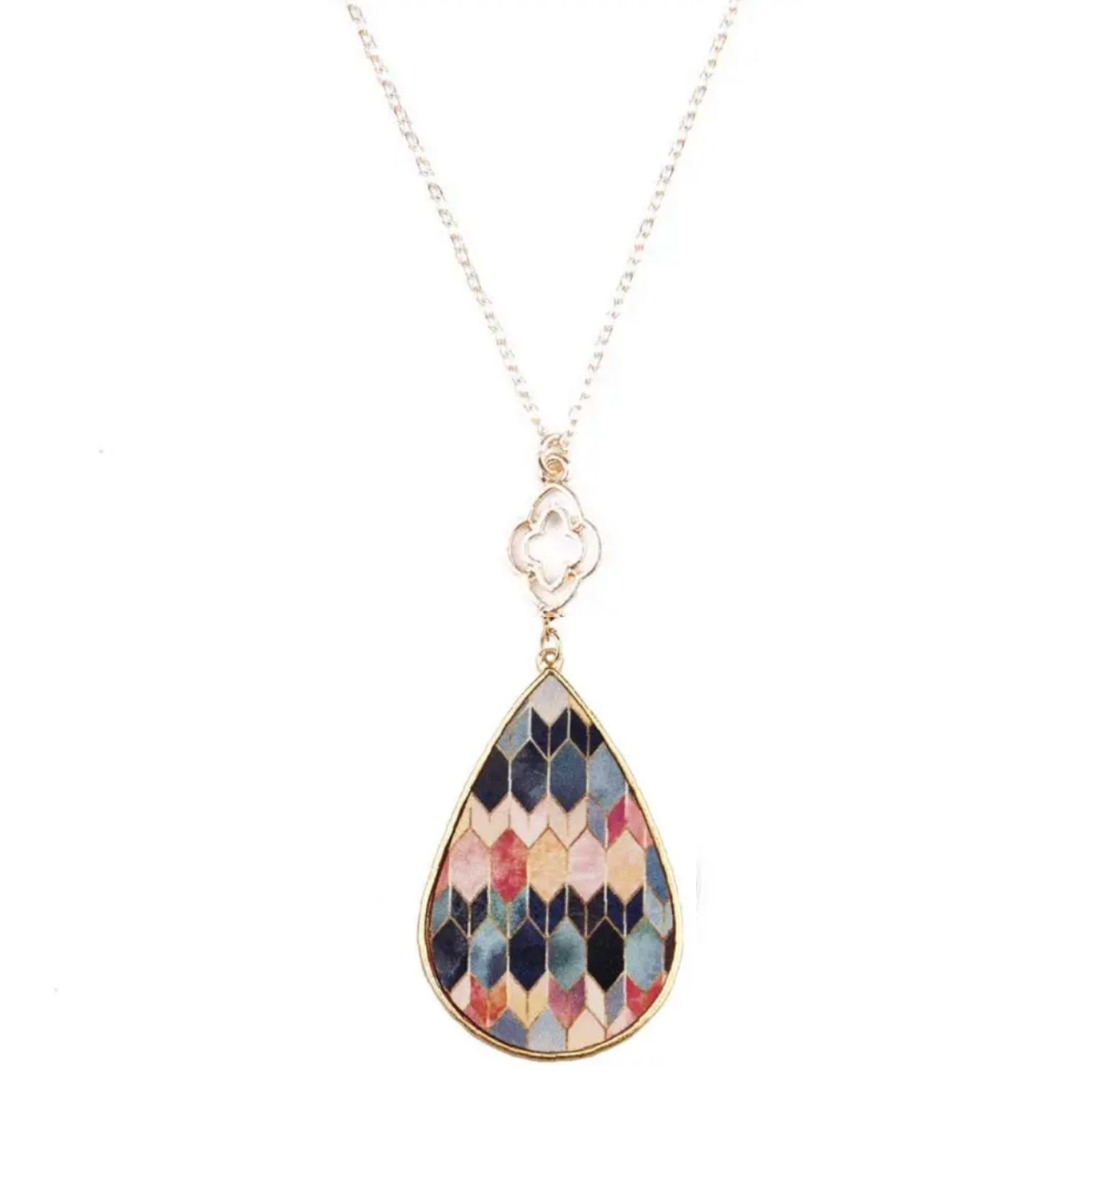 Luxe Layers: Multicolored Hexa Diamond Teardrop Necklace in Rich Goldtone